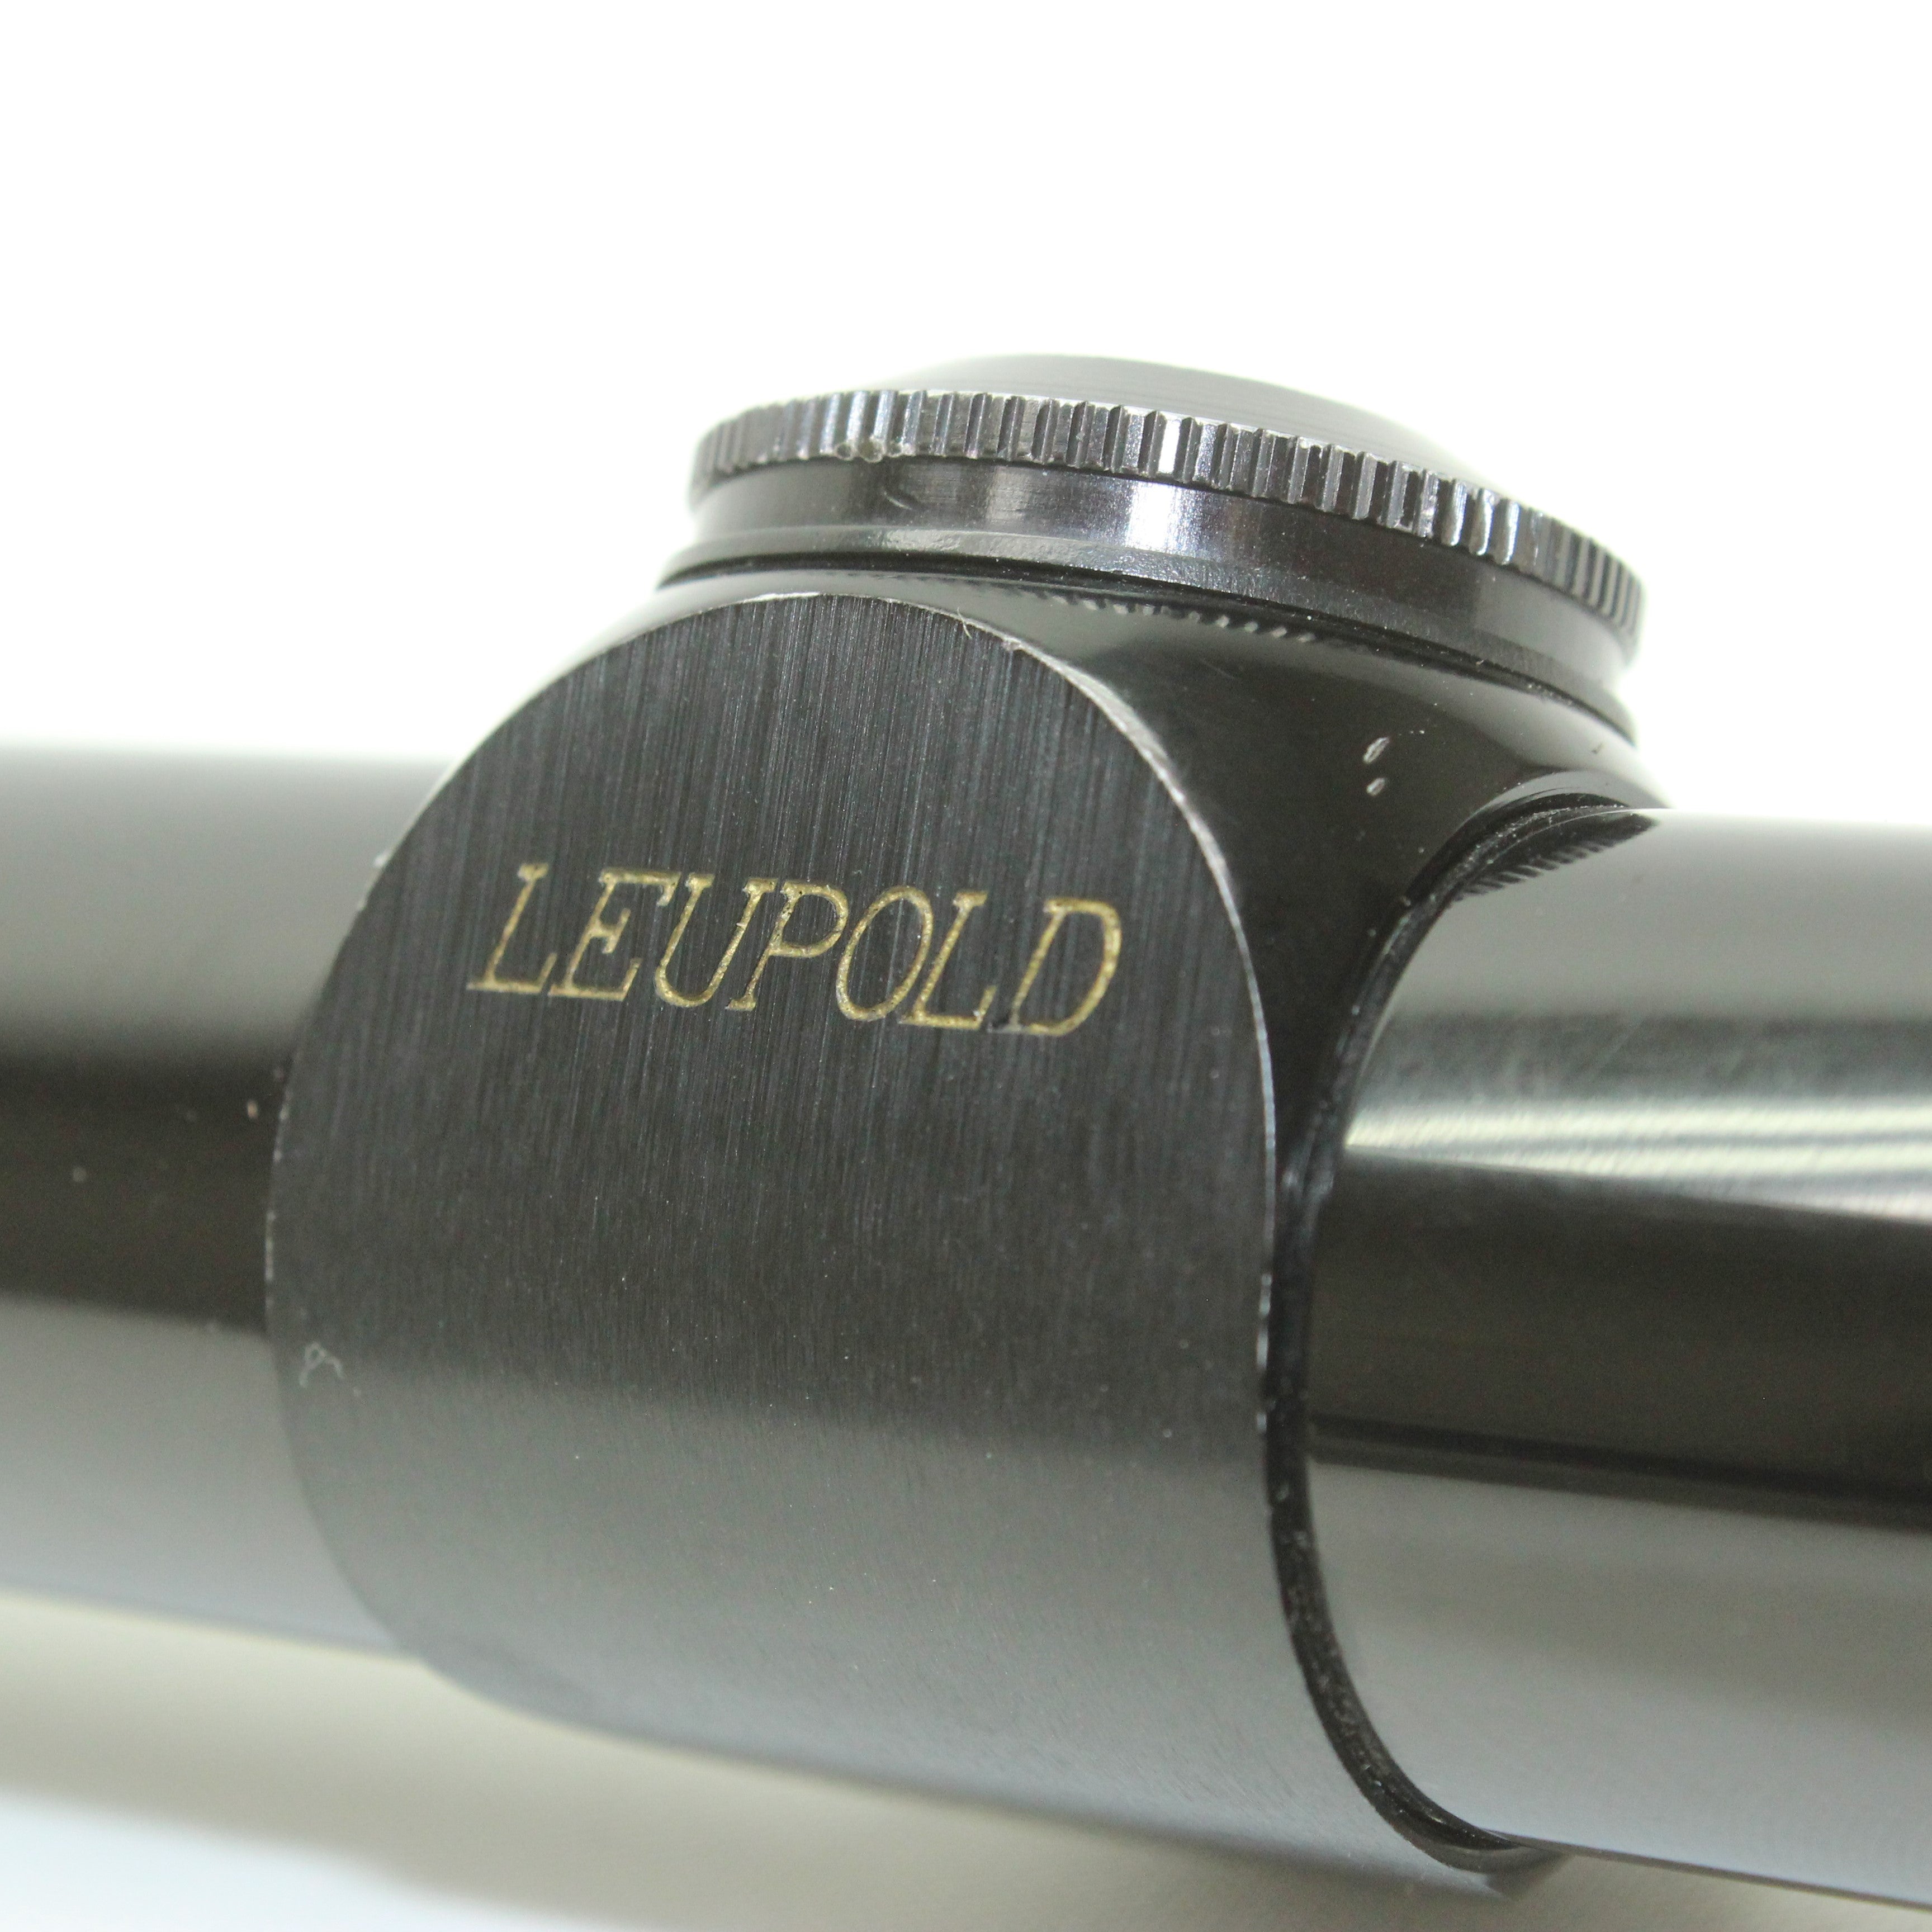 Leupold M8-4x30mm